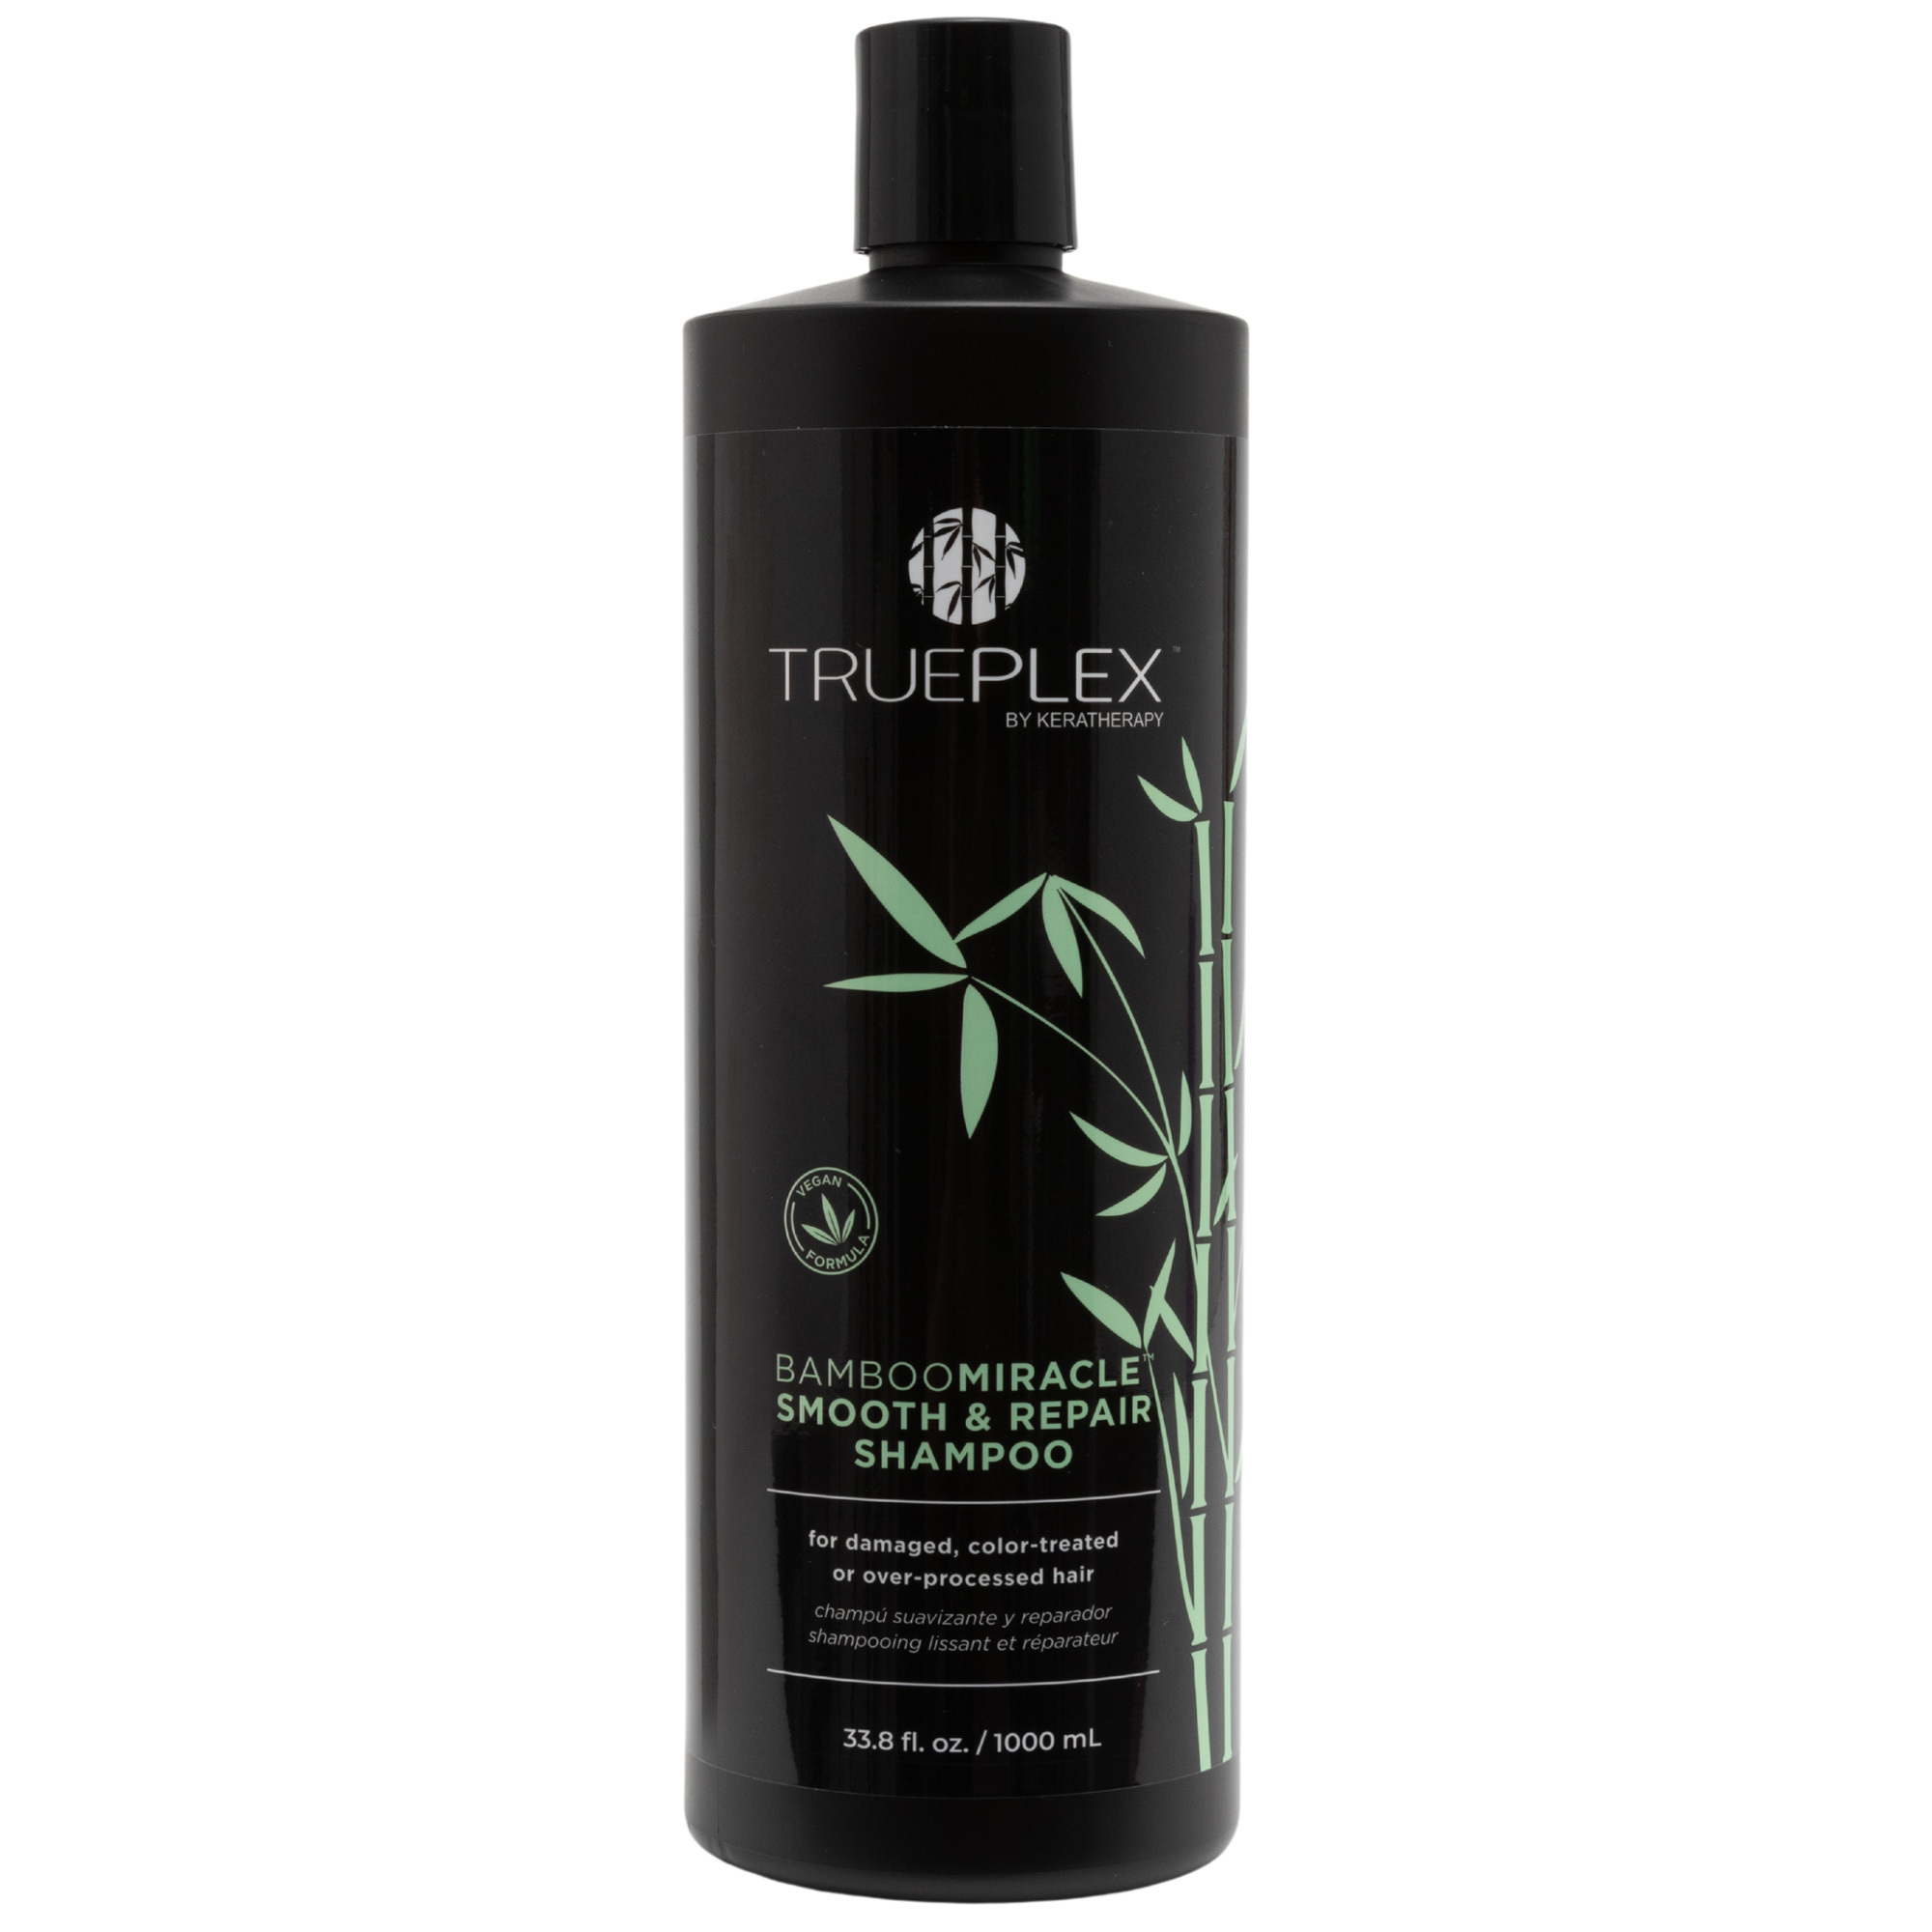 TruePlex Bamboo Miracle: Smooth & Repair Shampoo 1 liter